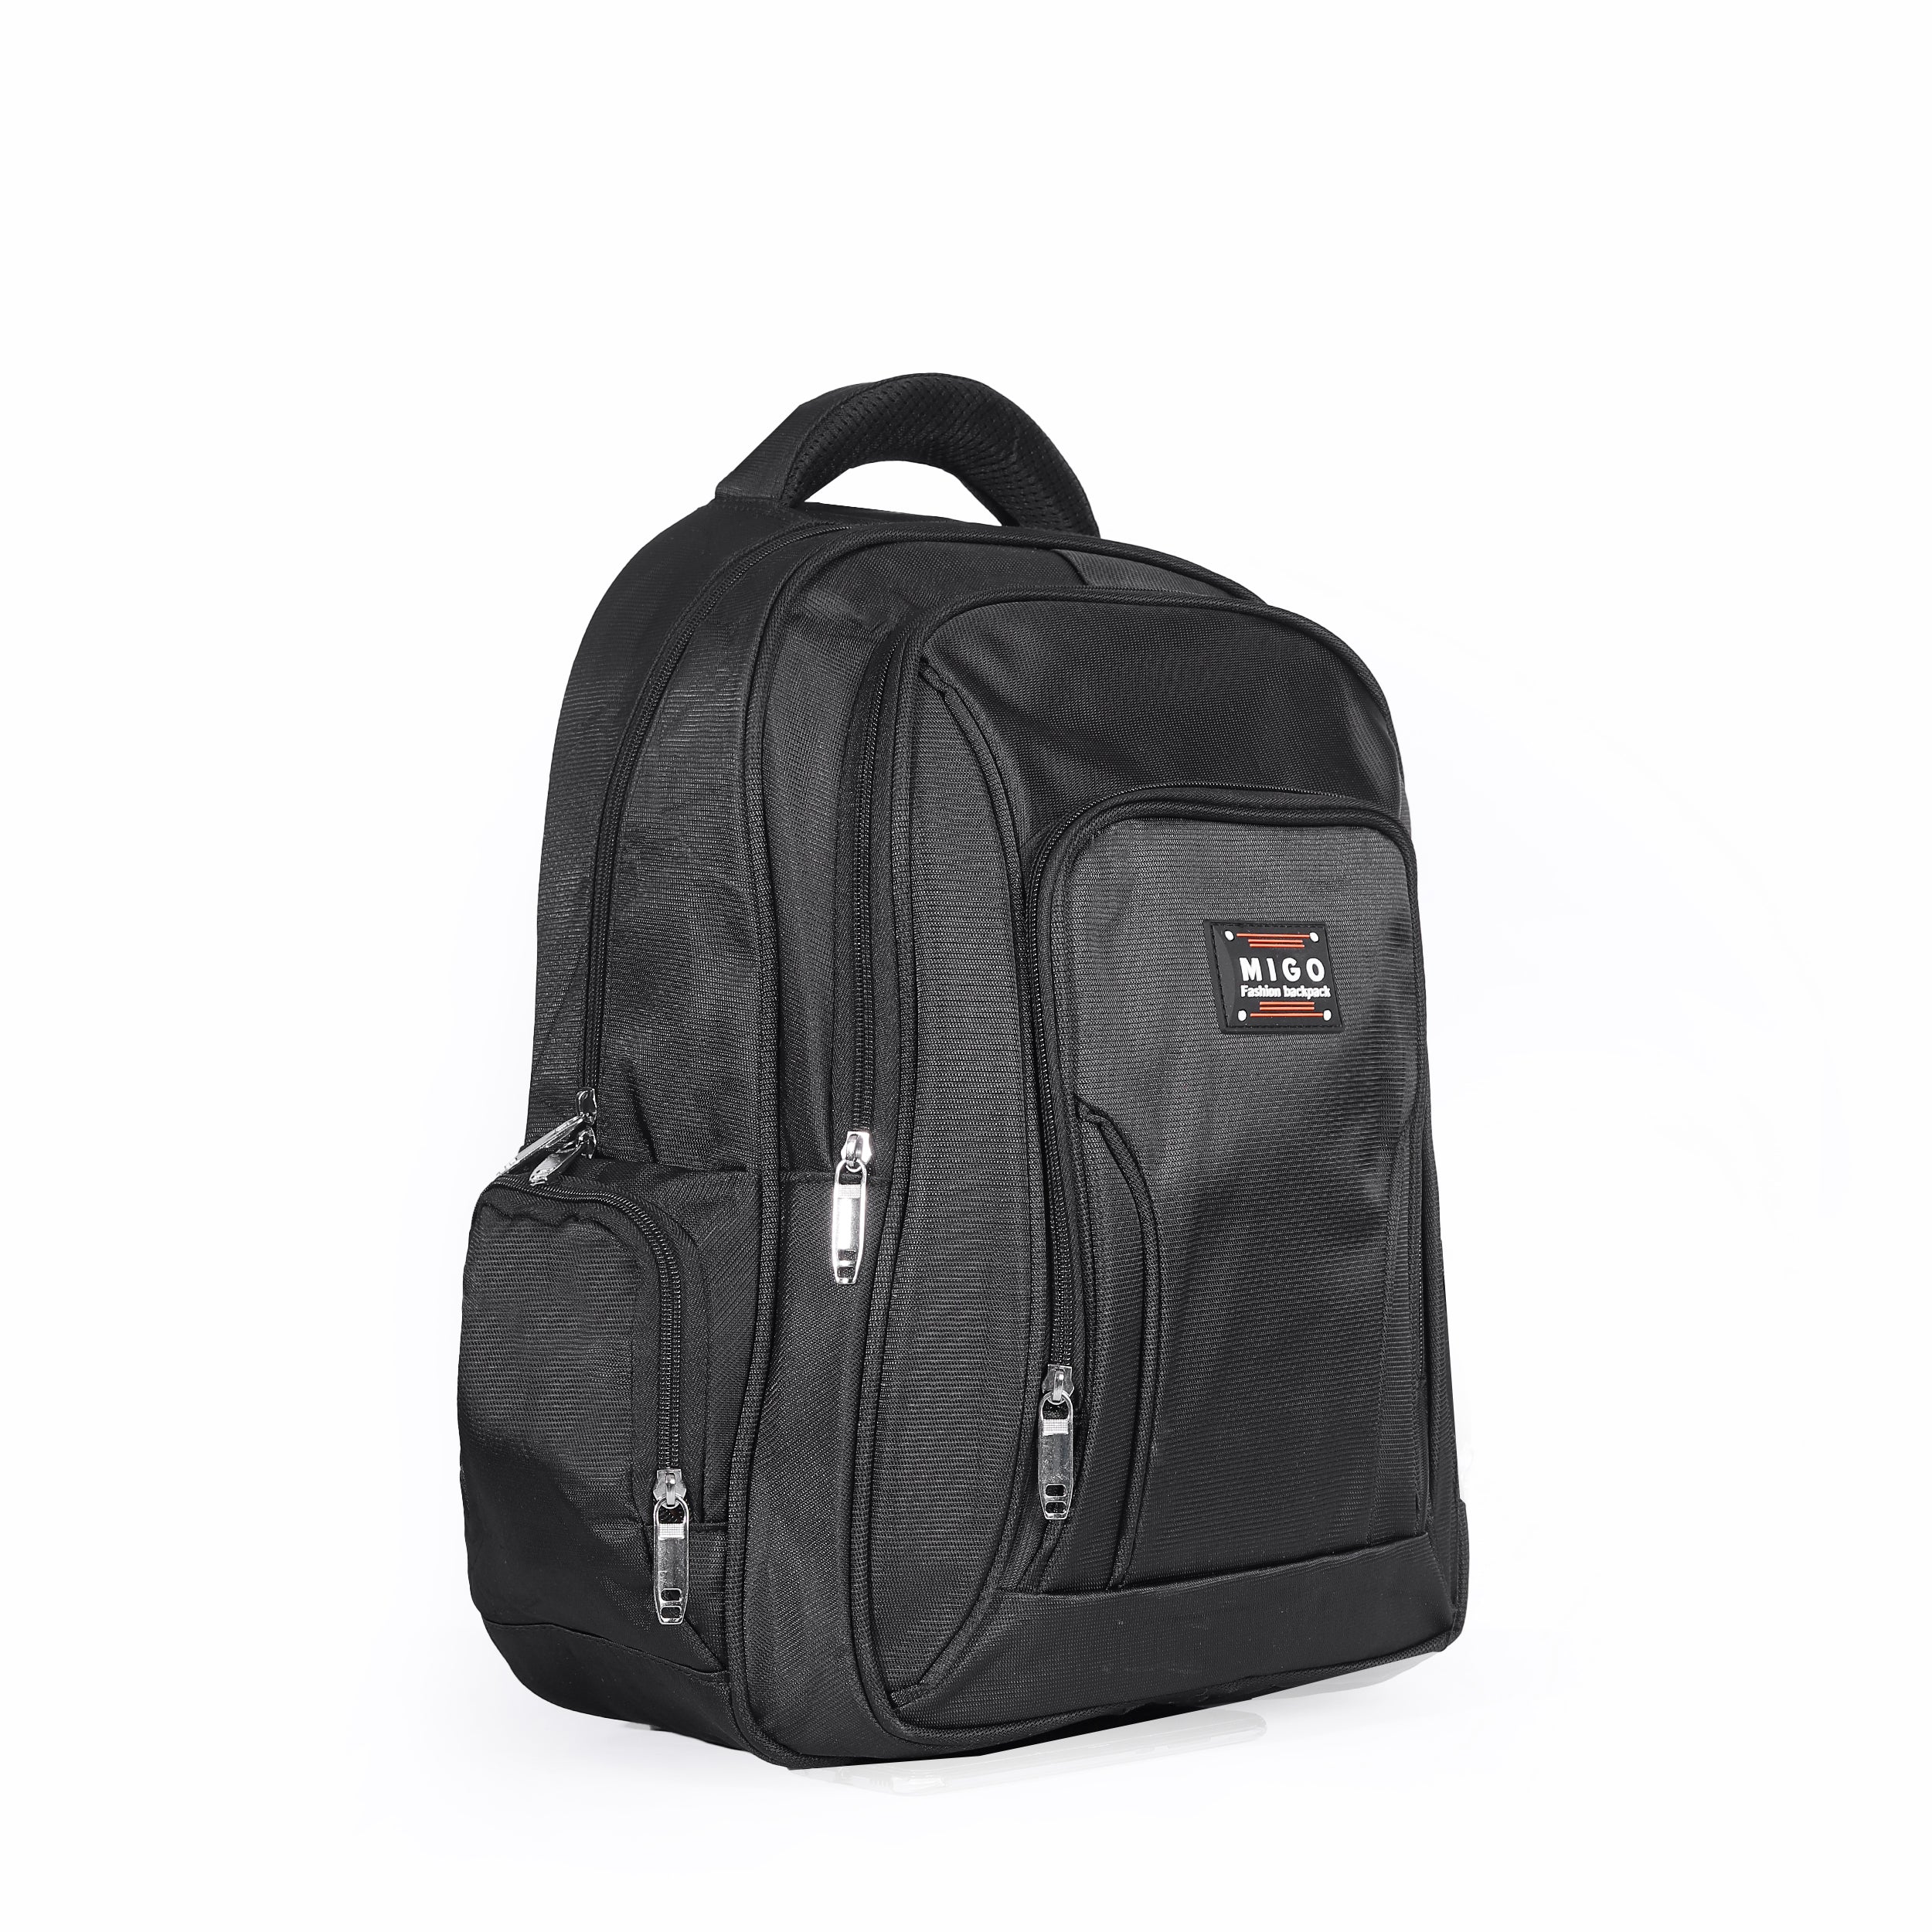 Basic Black II Bag For Kids 18 INCH